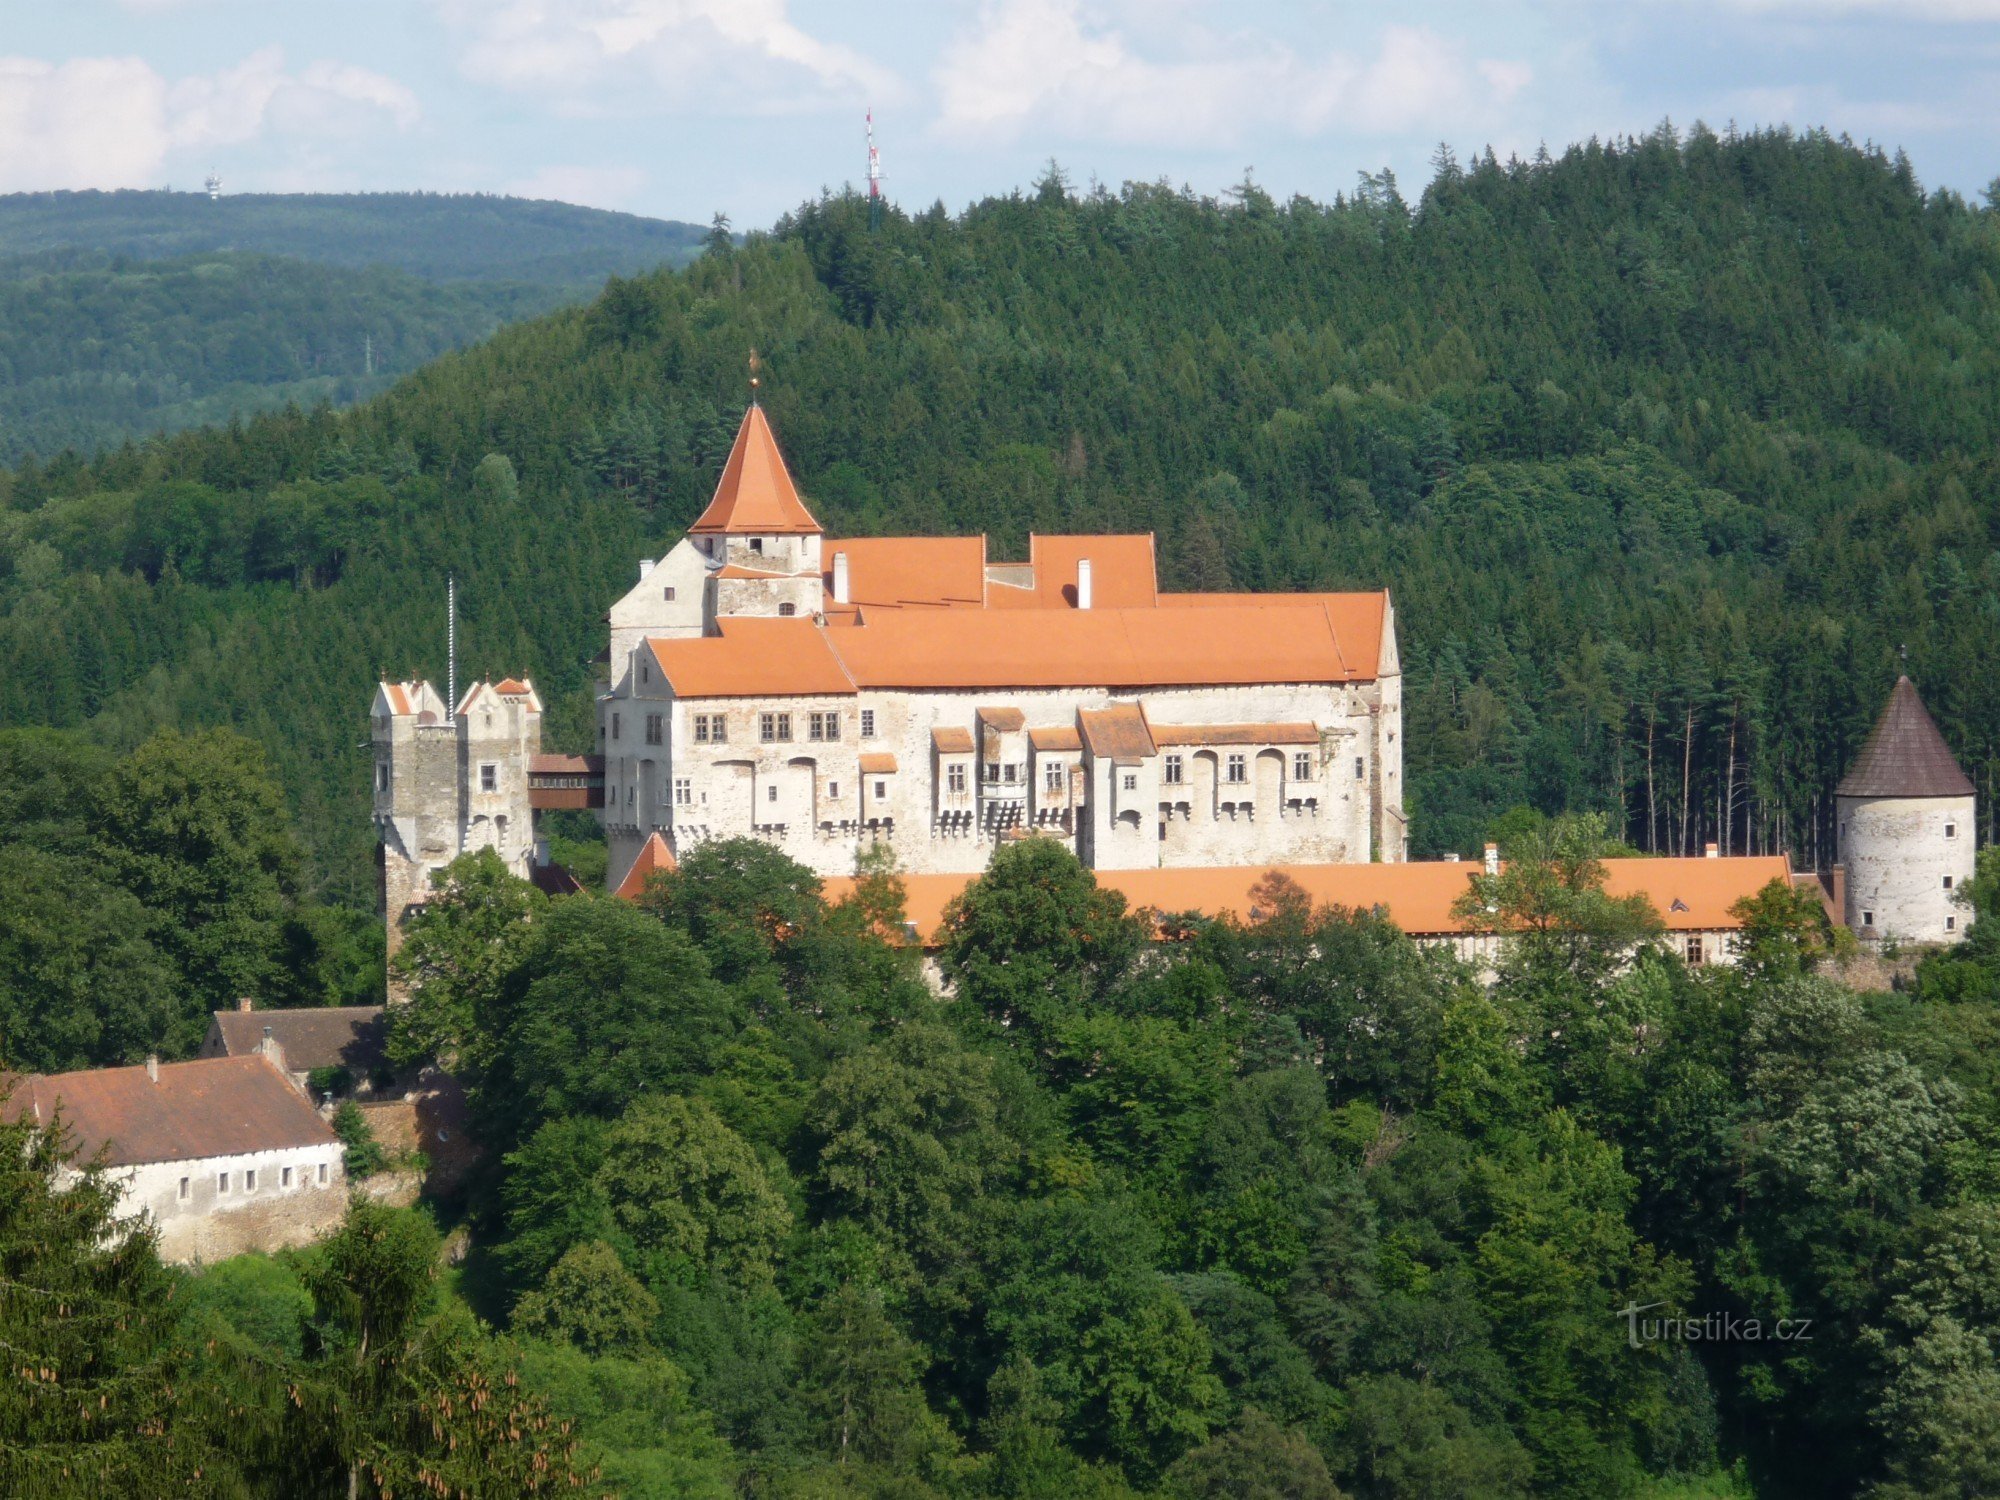 View of Pernštejn Castle